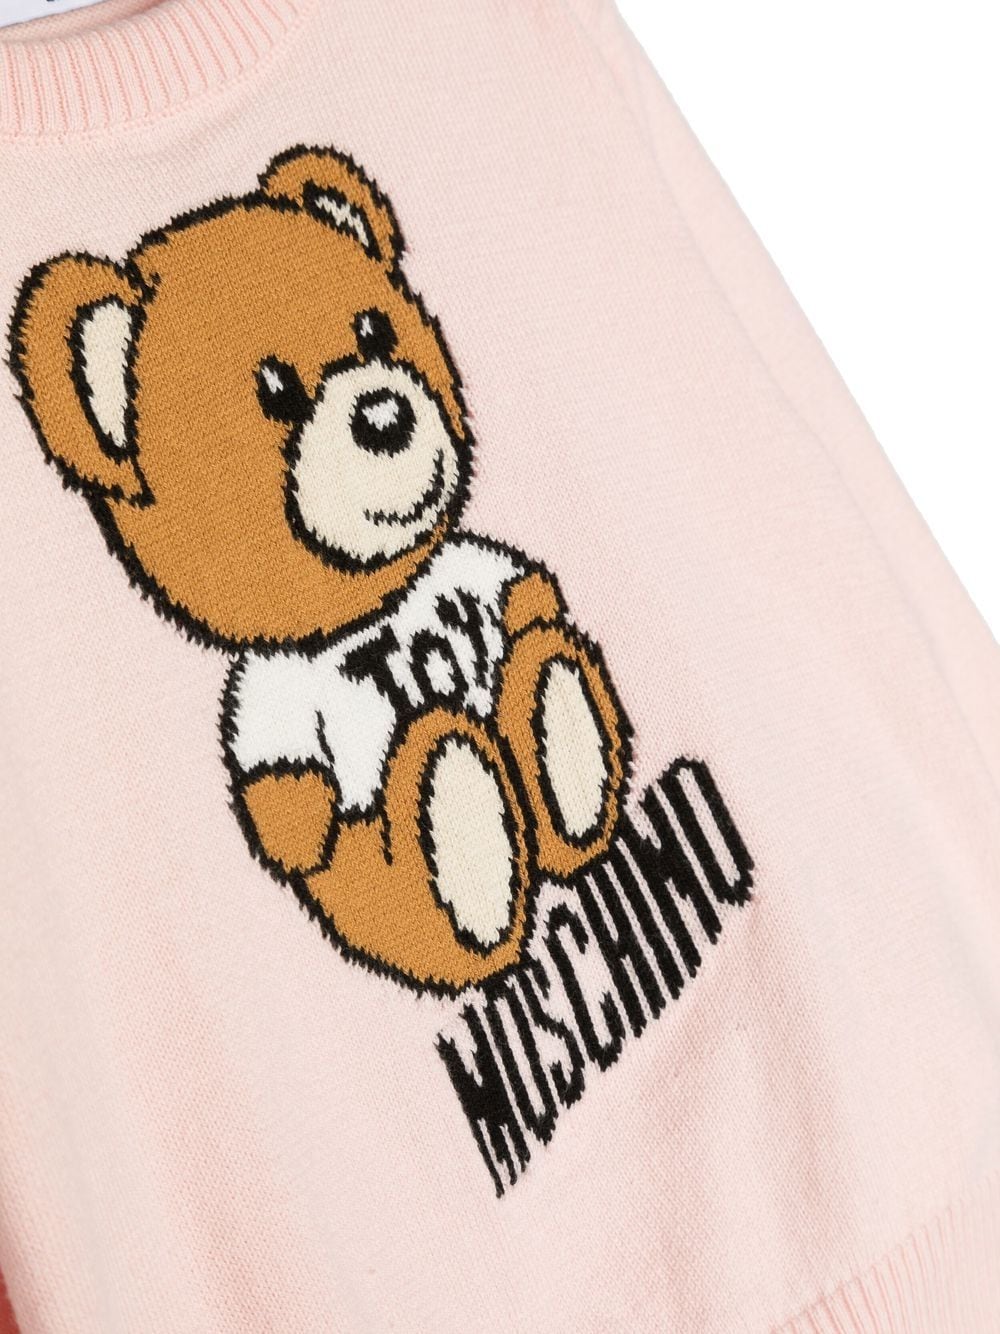 Maglione Teddy Bear - Rubino Kids